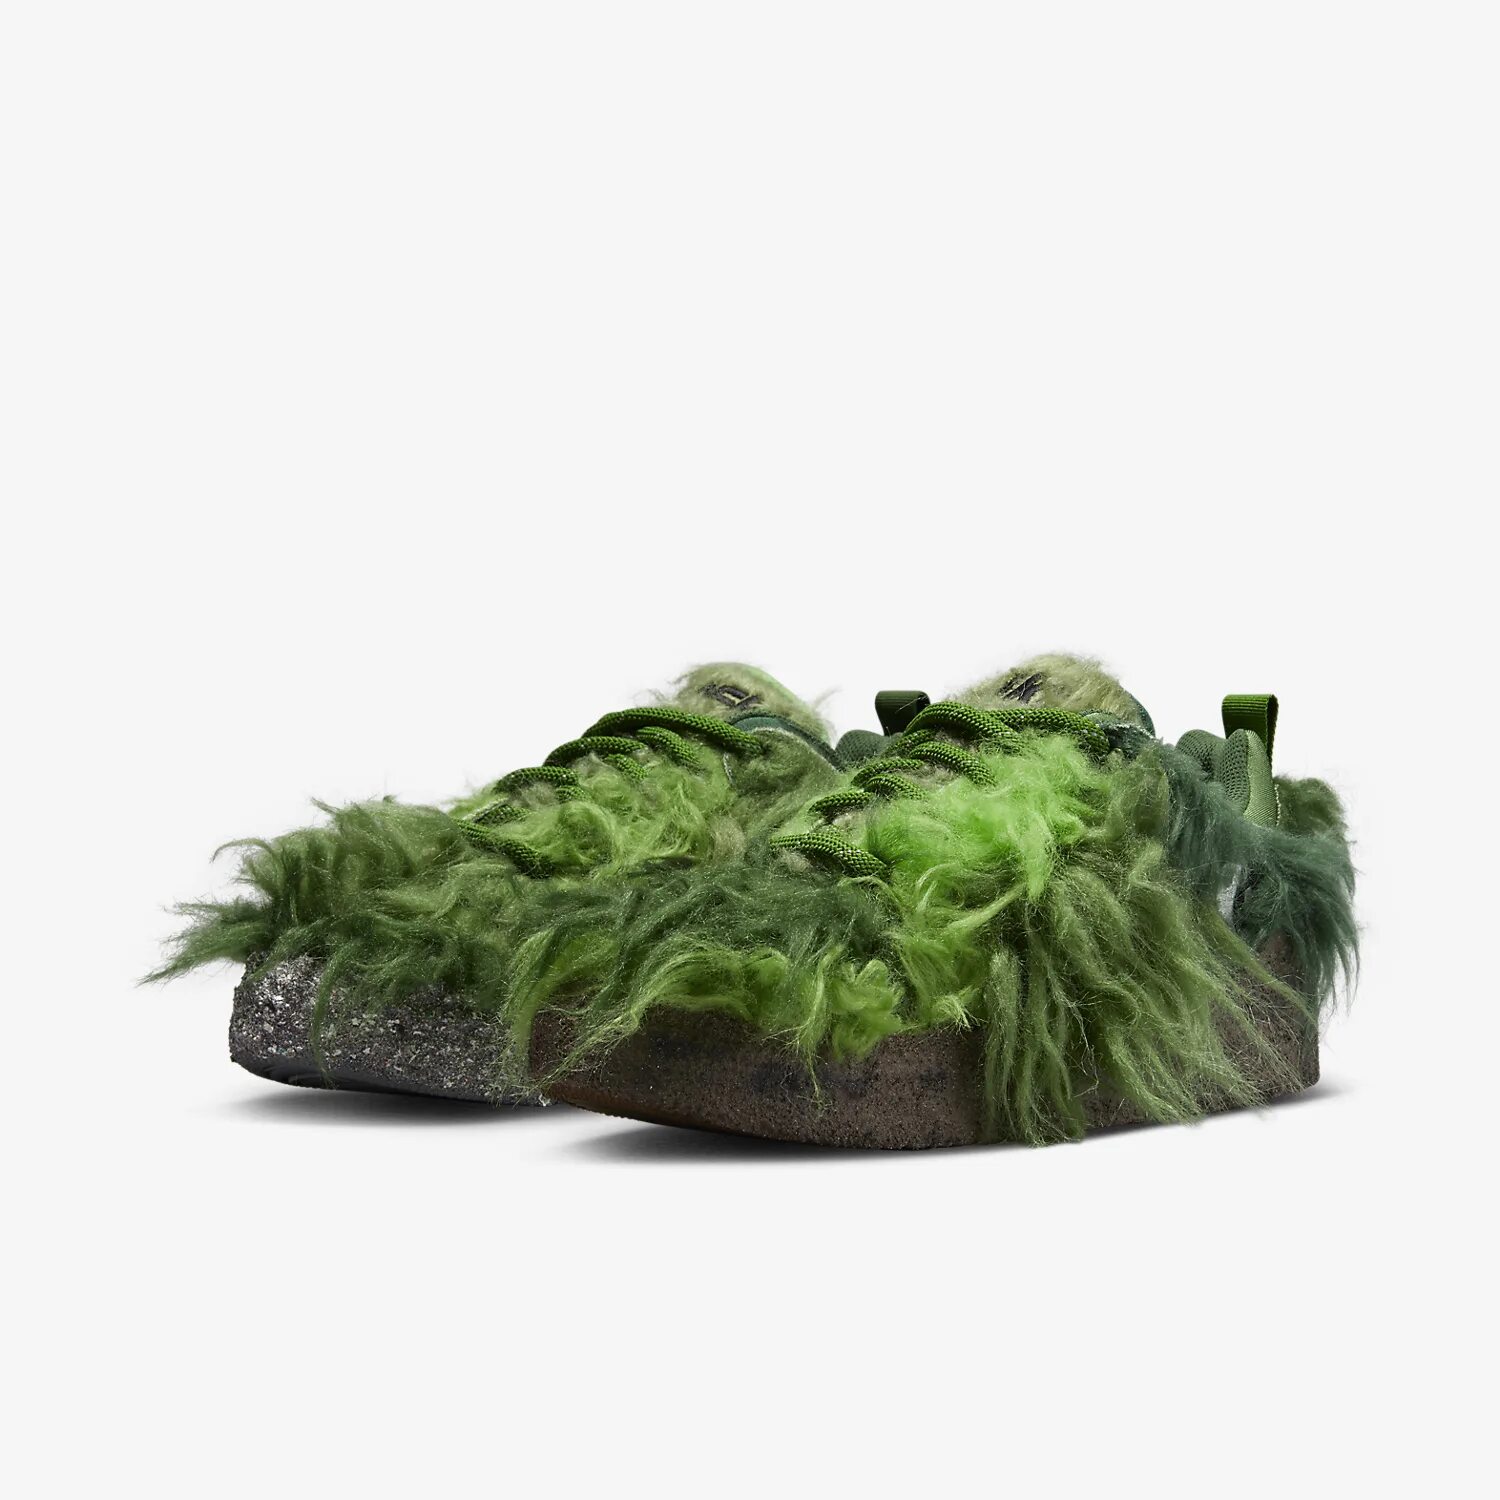 Nike Flea 1 x Cactus. CPFM Flea 1. Кактус Плант Флеа Маркет. Cactus Plant Flea Market x Nike CPFM Flea 1 «Overgrown». Nike plant flea market